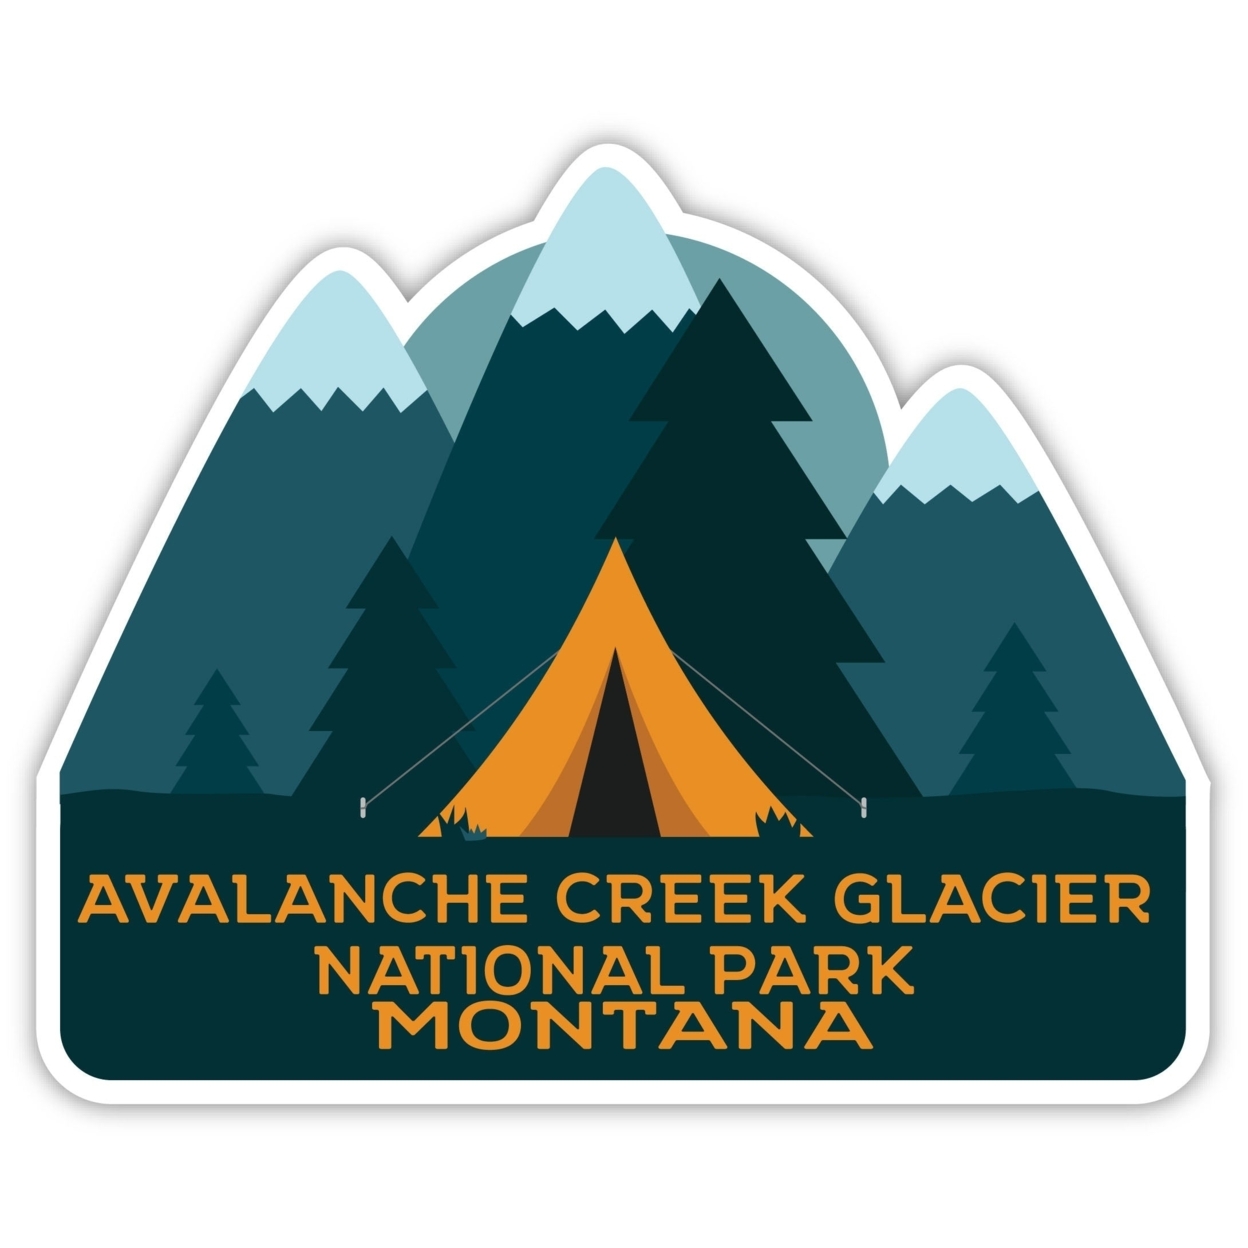 Avalanche Creek Glacier National Park Montana Souvenir Decorative Stickers (Choose Theme And Size) - 4-Pack, 4-Inch, Tent